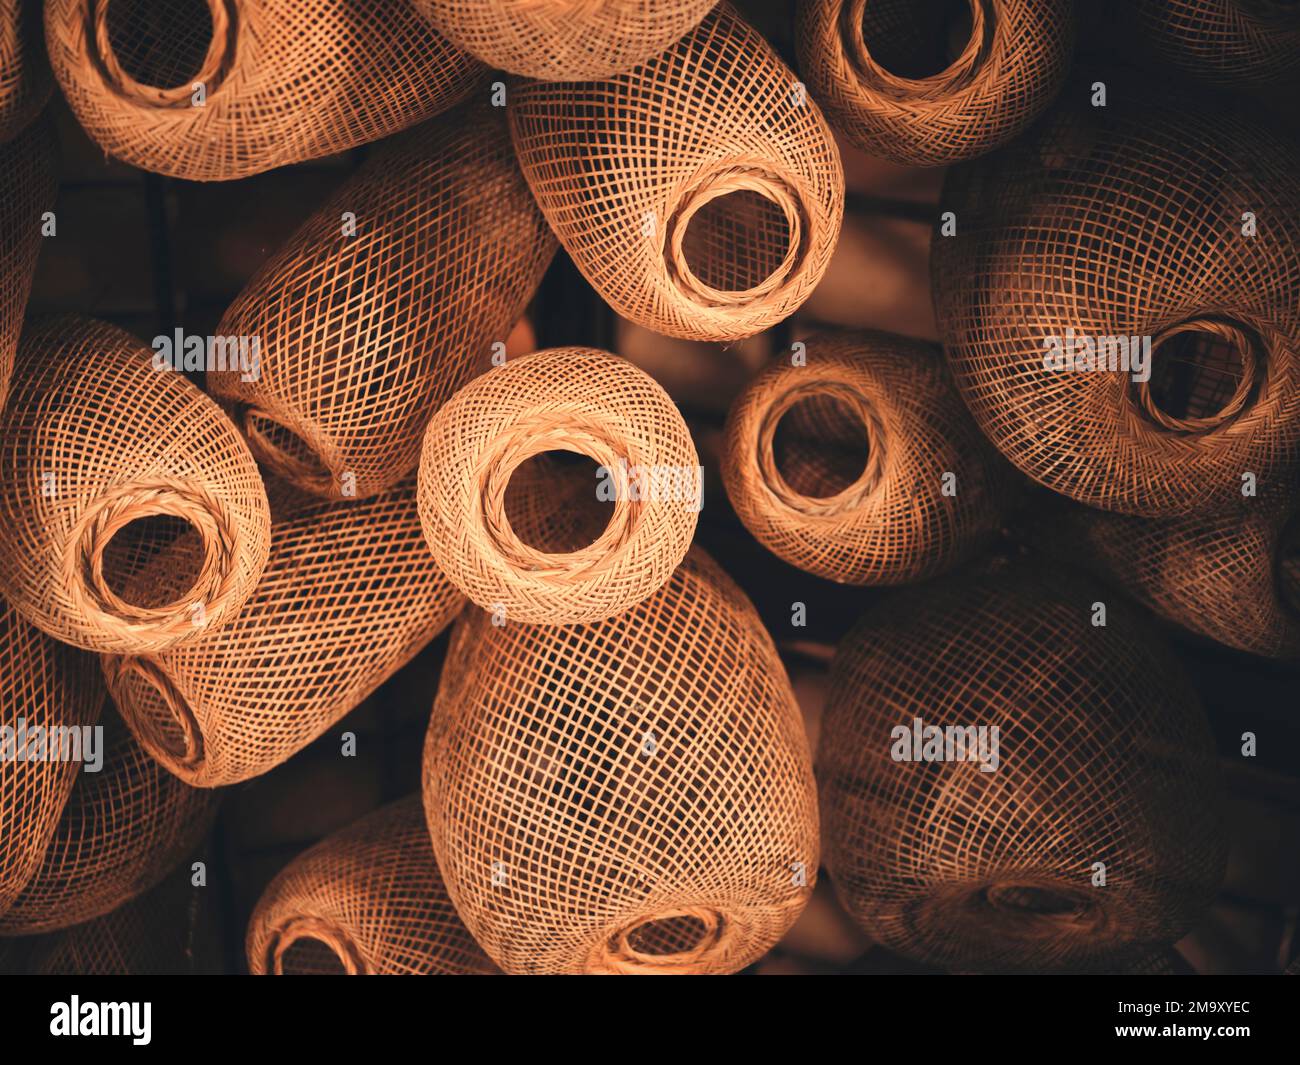 ozono Clásico Respiración Resplandor de bambú fotografías e imágenes de alta resolución - Página 3 -  Alamy